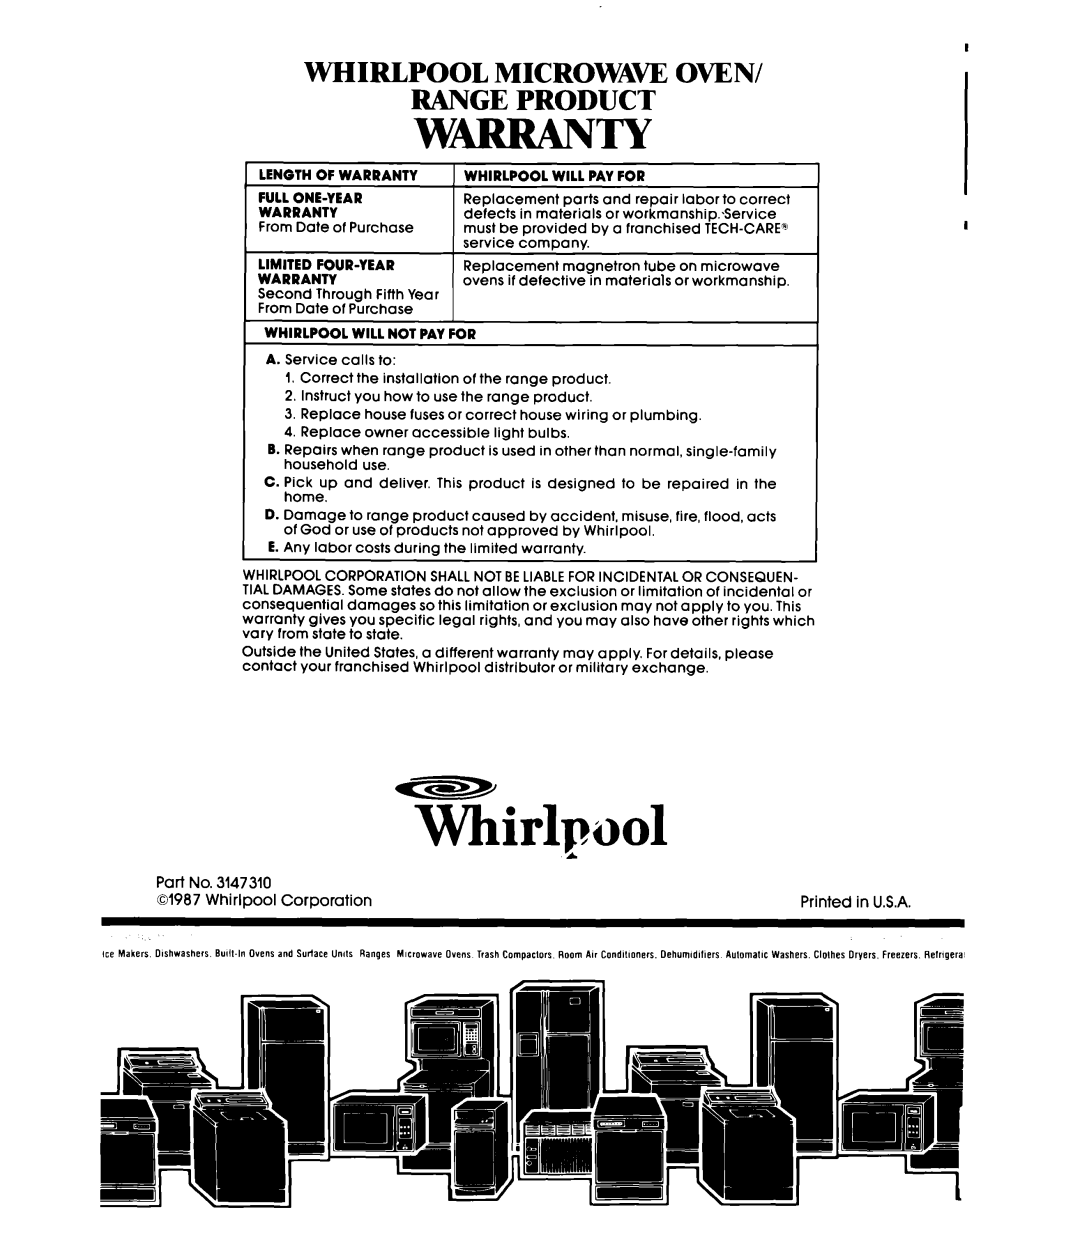 Whirlpool MW8570XR manual Whirlpool, W-Ty, WHIRLPOOL MICROWAm OVEN RANGE PRODUCT 